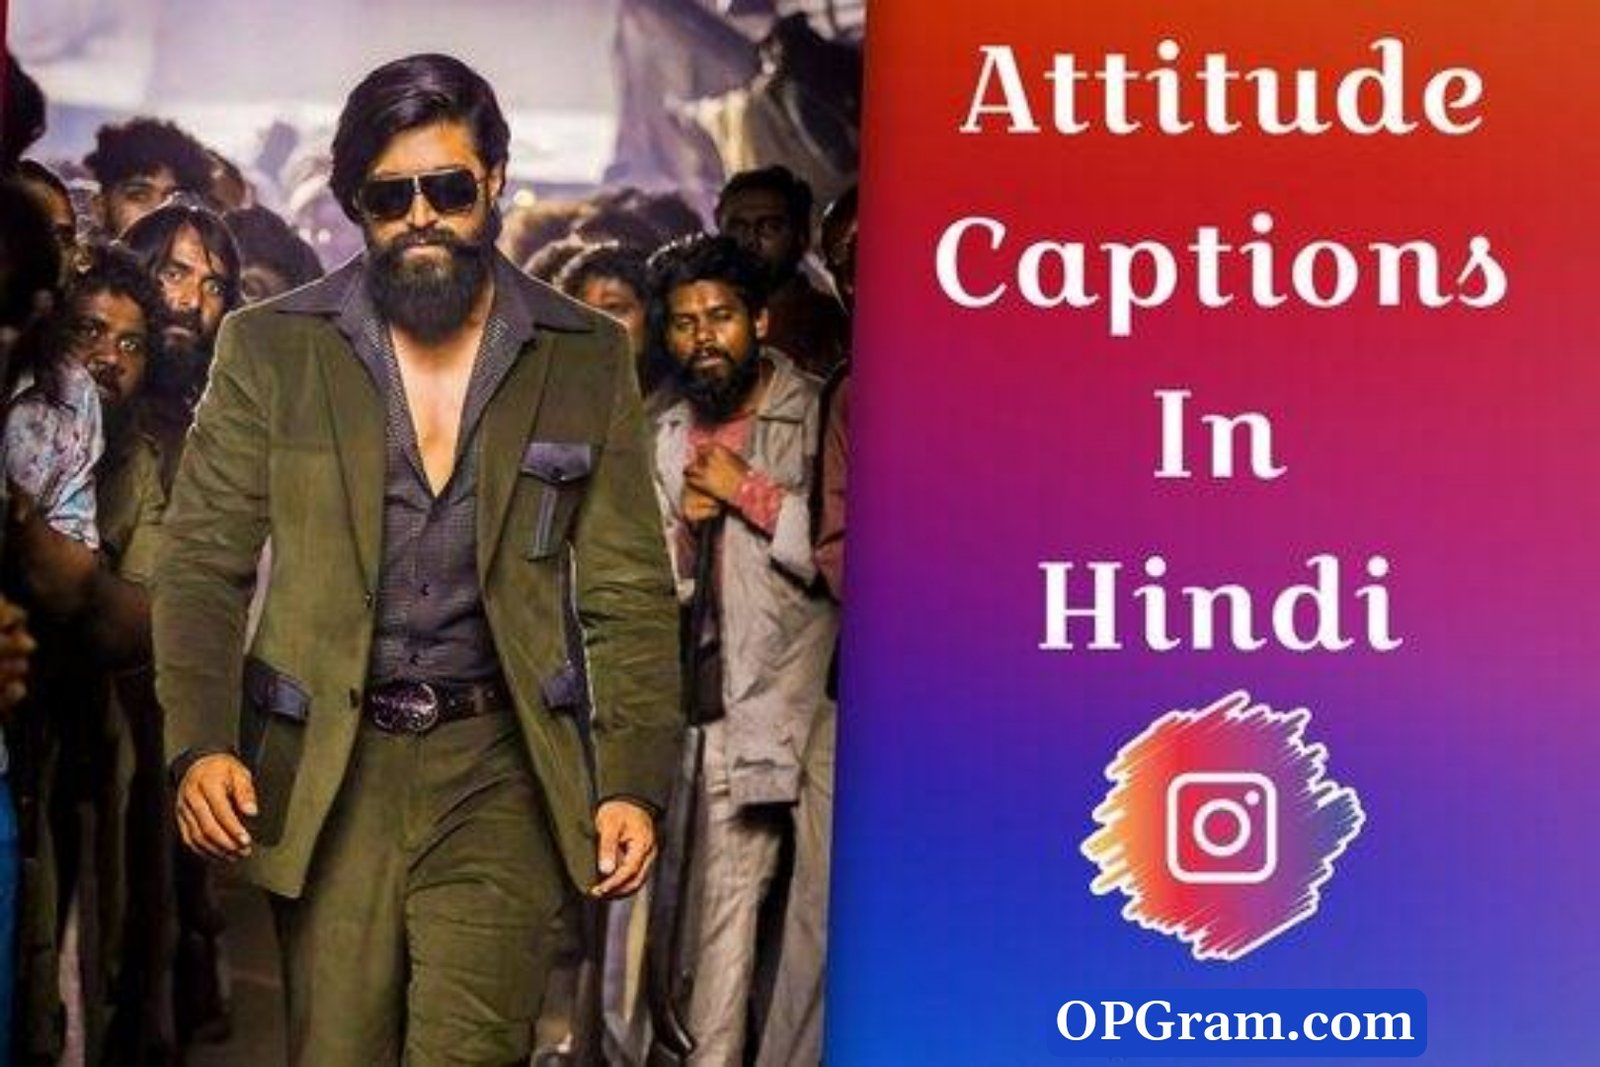 Attitude captions for Instagram in Hindi